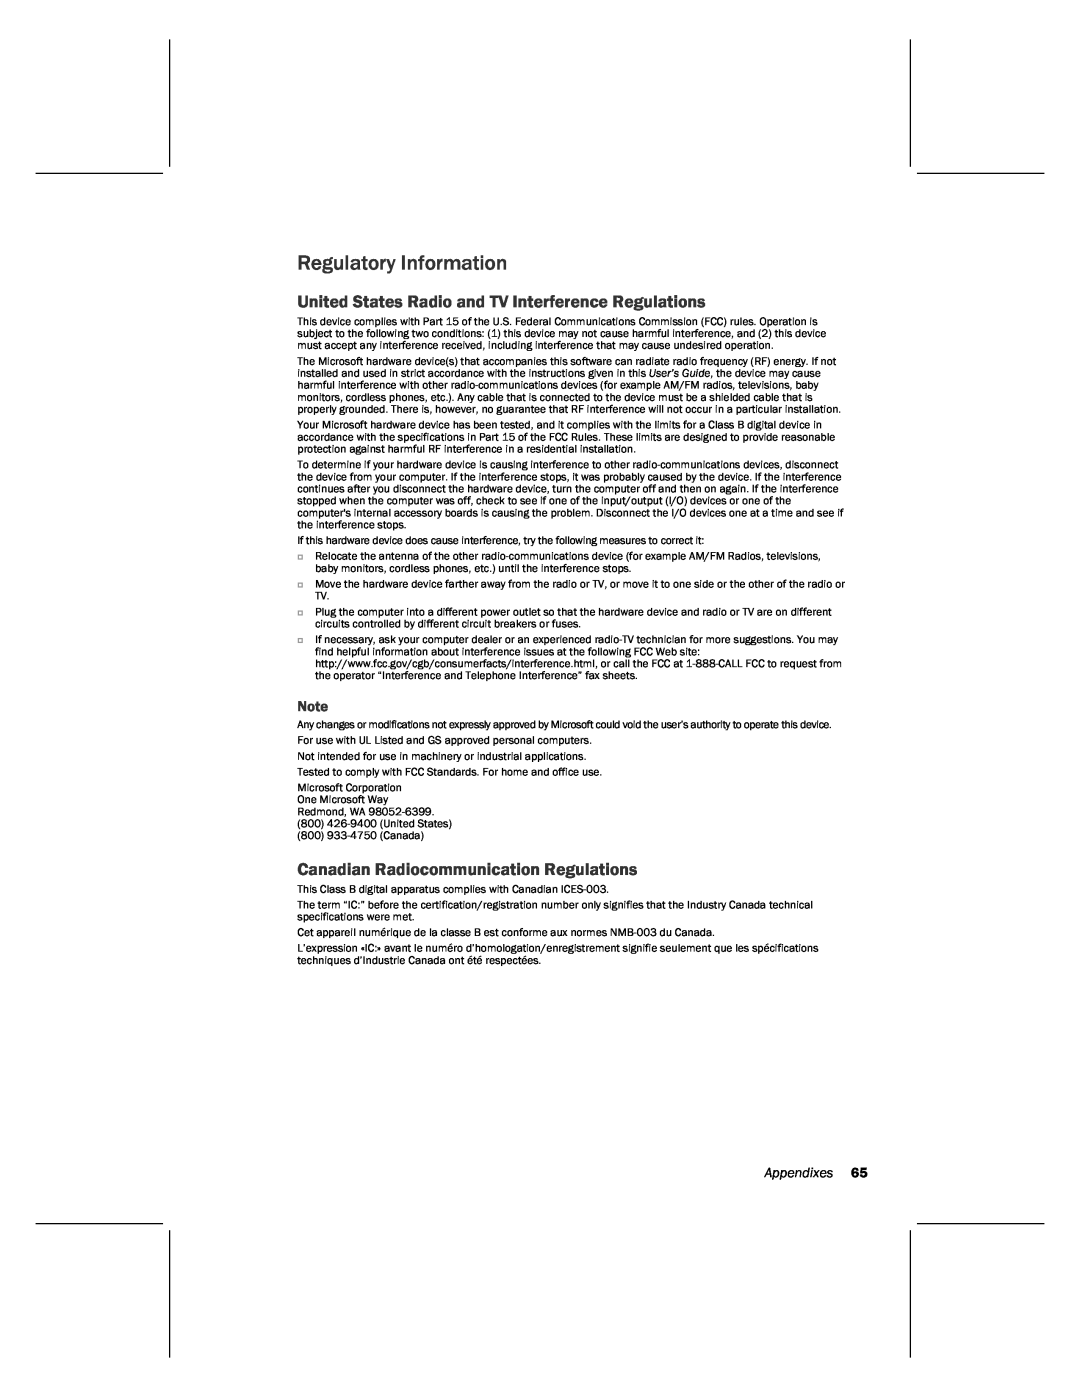 Microsoft MN-820 manual Regulatory Information, United States Radio and TV Interference Regulations, Appendixes 